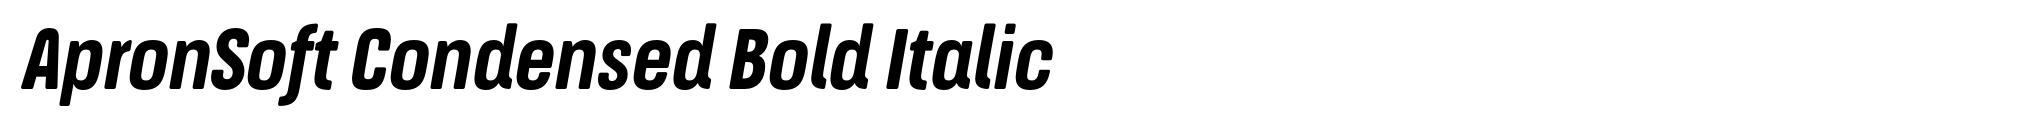 ApronSoft Condensed Bold Italic image